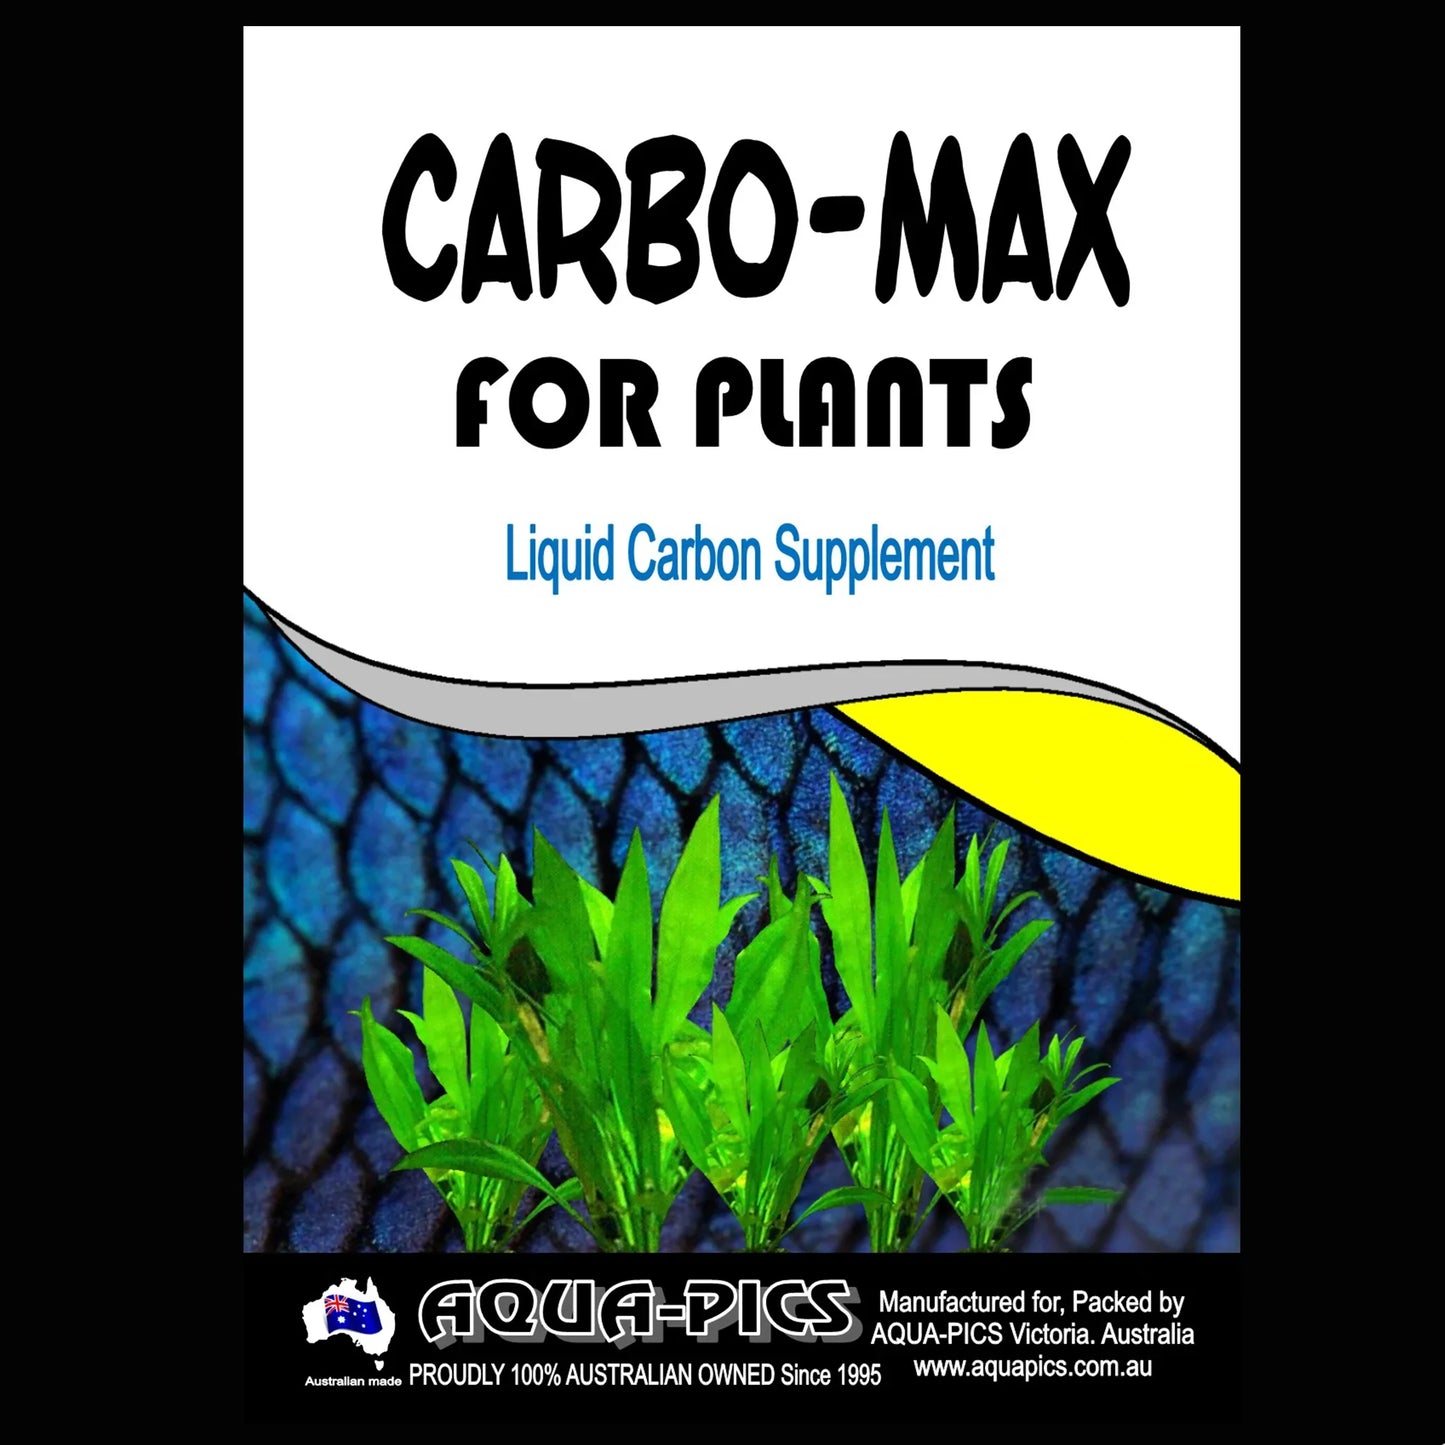 Carbo-Max Professional grade liquid carbon supplement 125ml